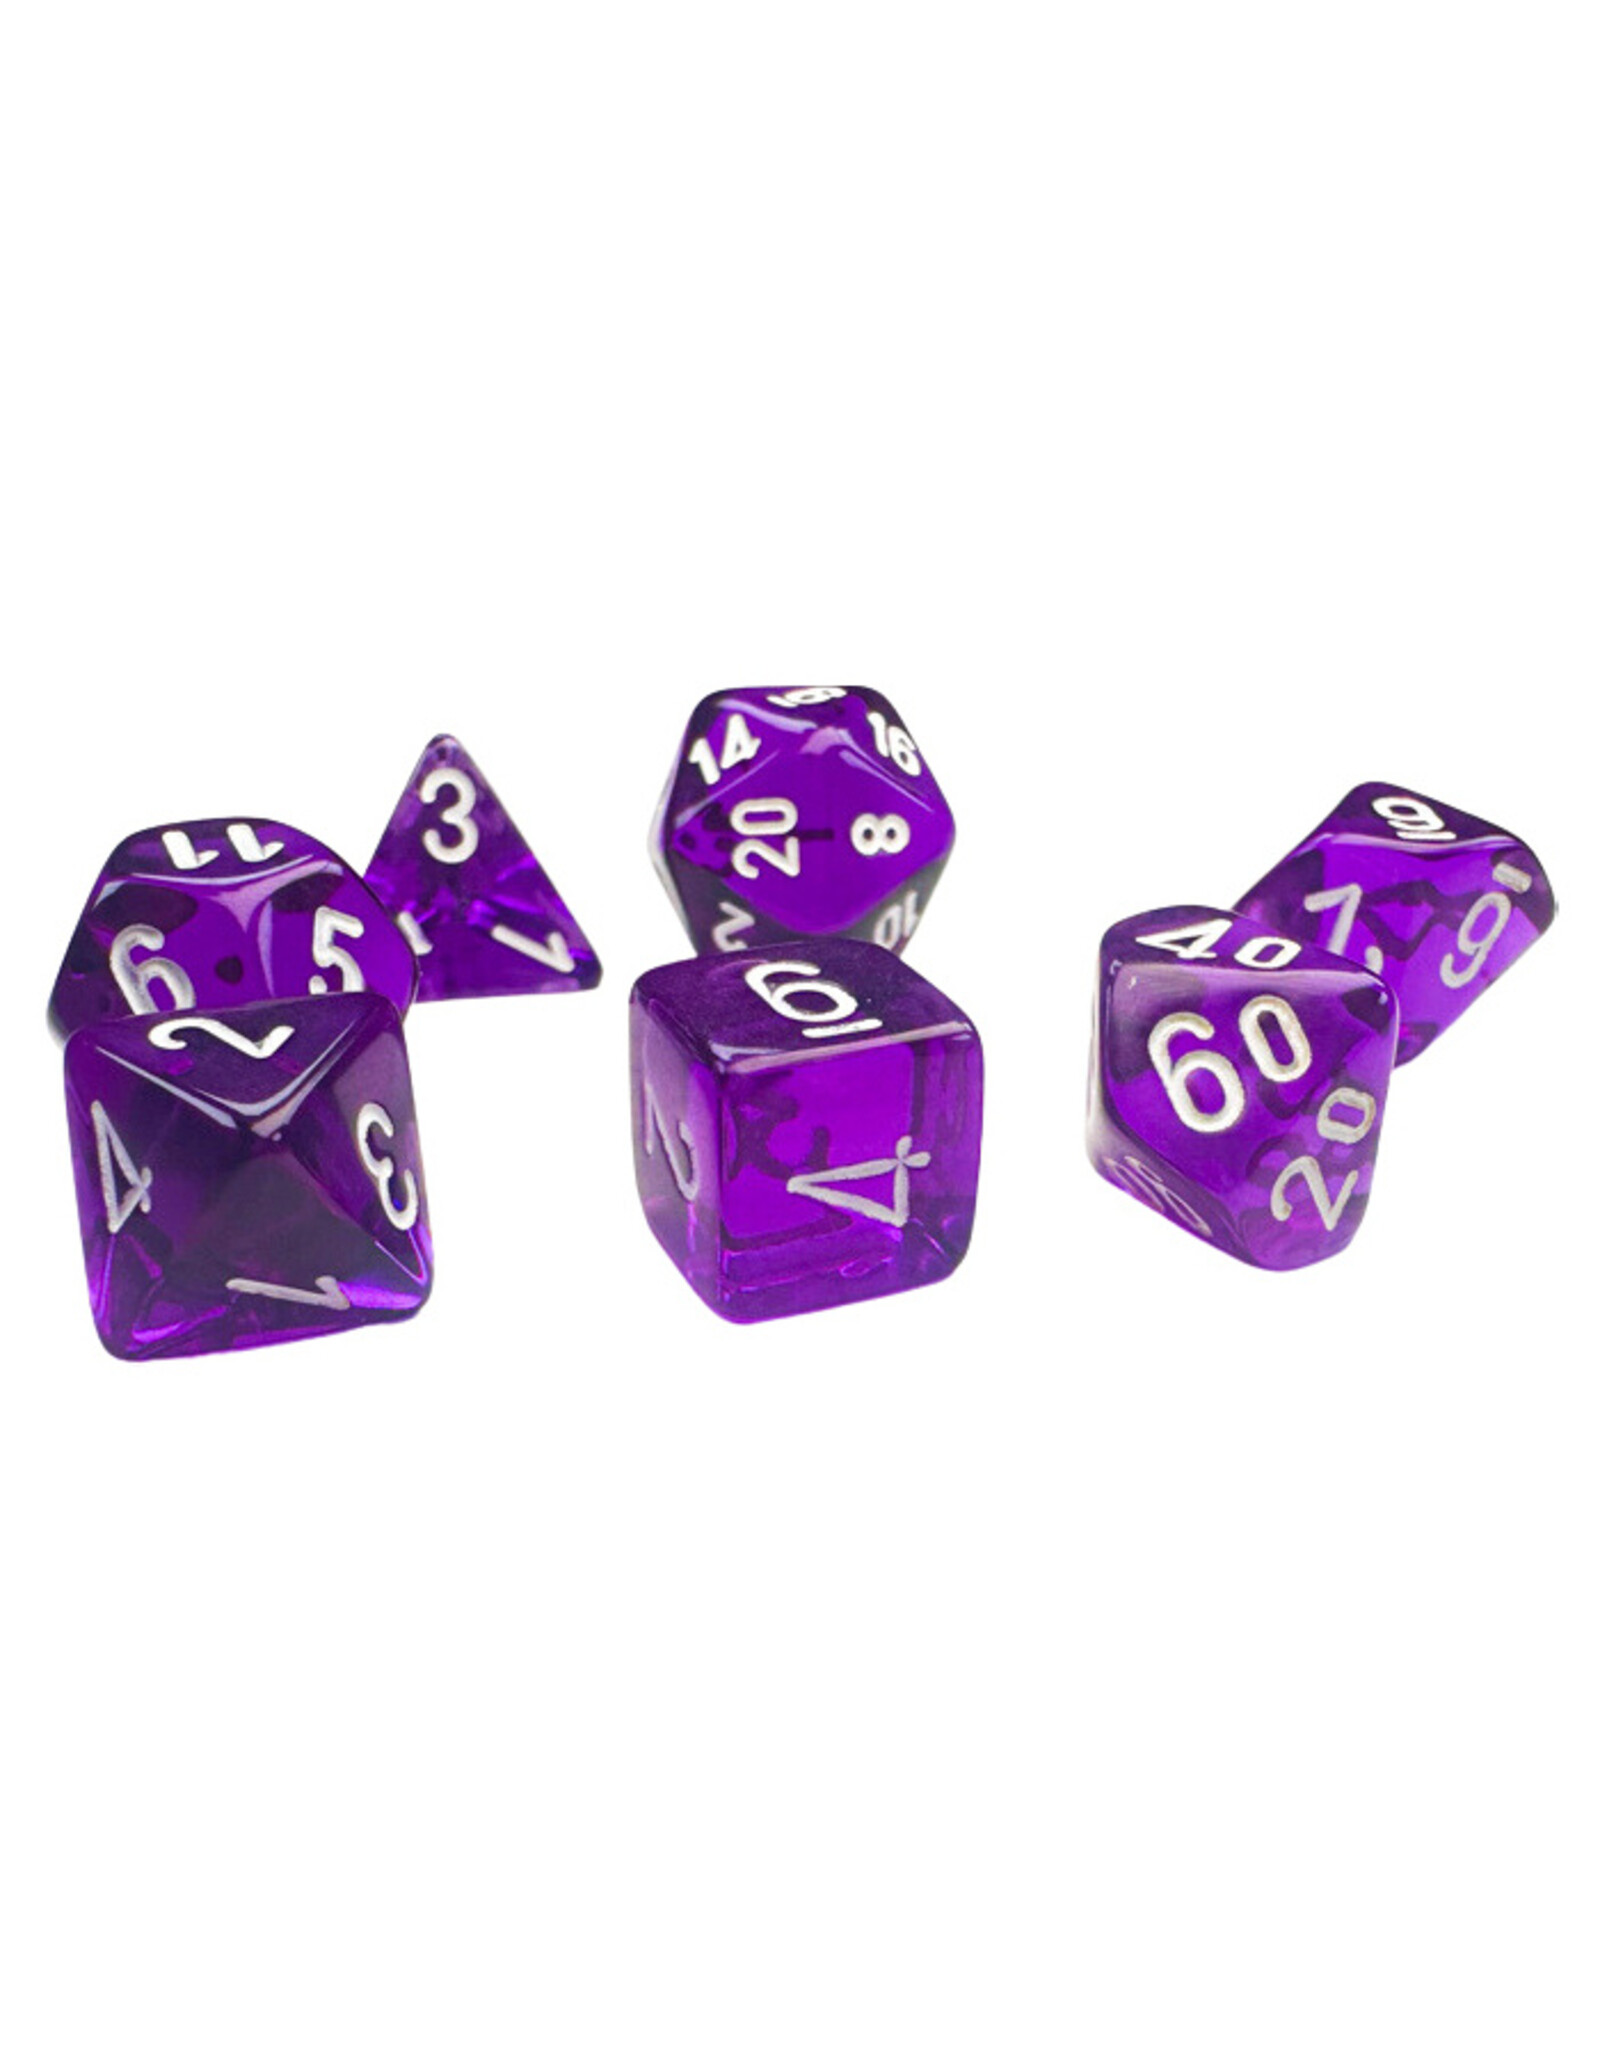 Chessex 7-Set Mini Translucent Purple with White